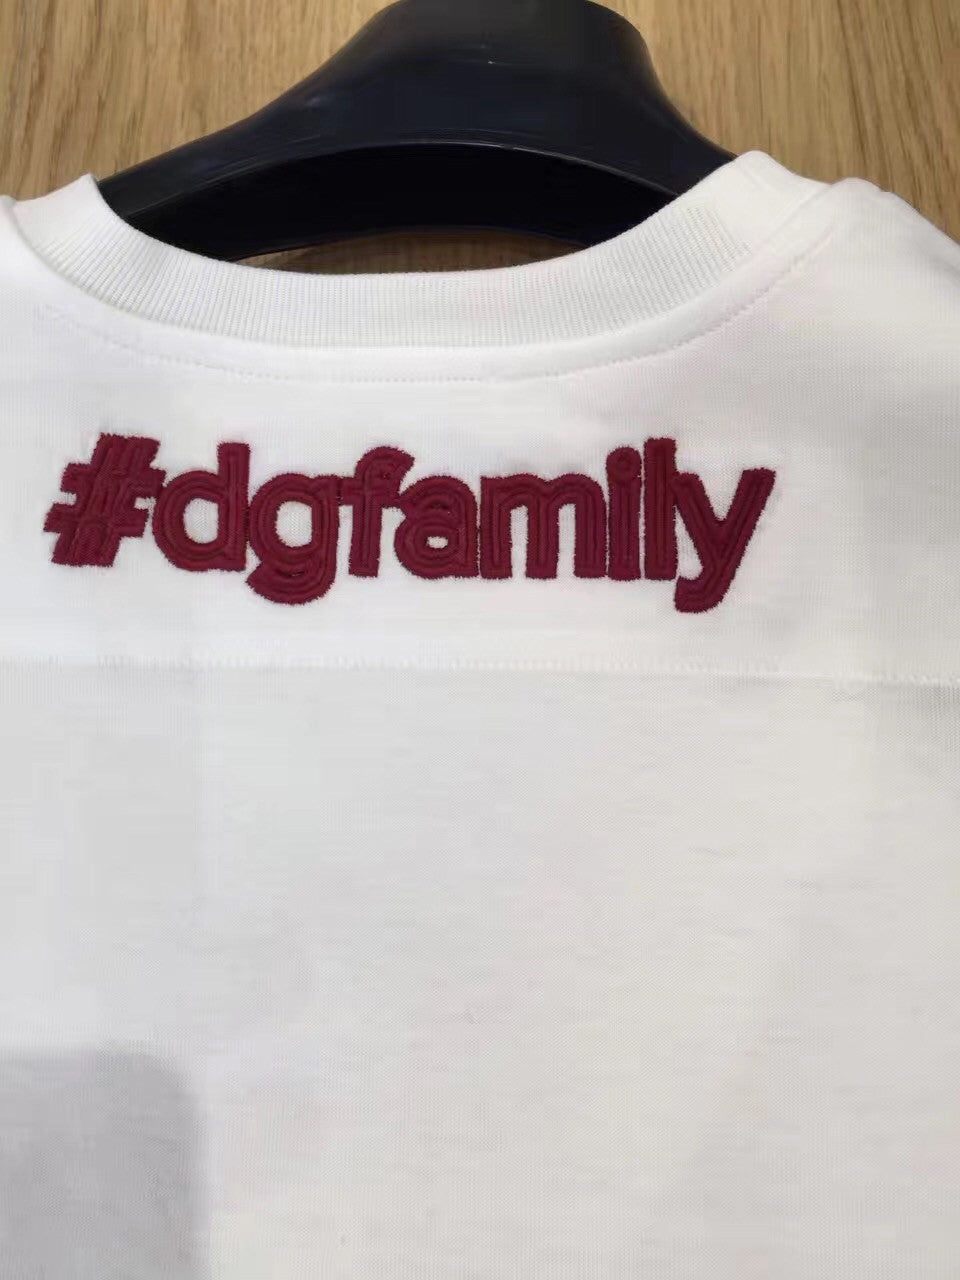 Girls White "DG Family" Cotton T-shirt